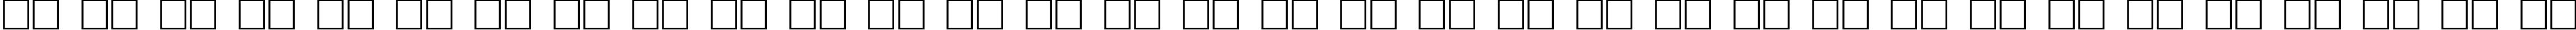 Пример написания русского алфавита шрифтом Symmetric Things 2